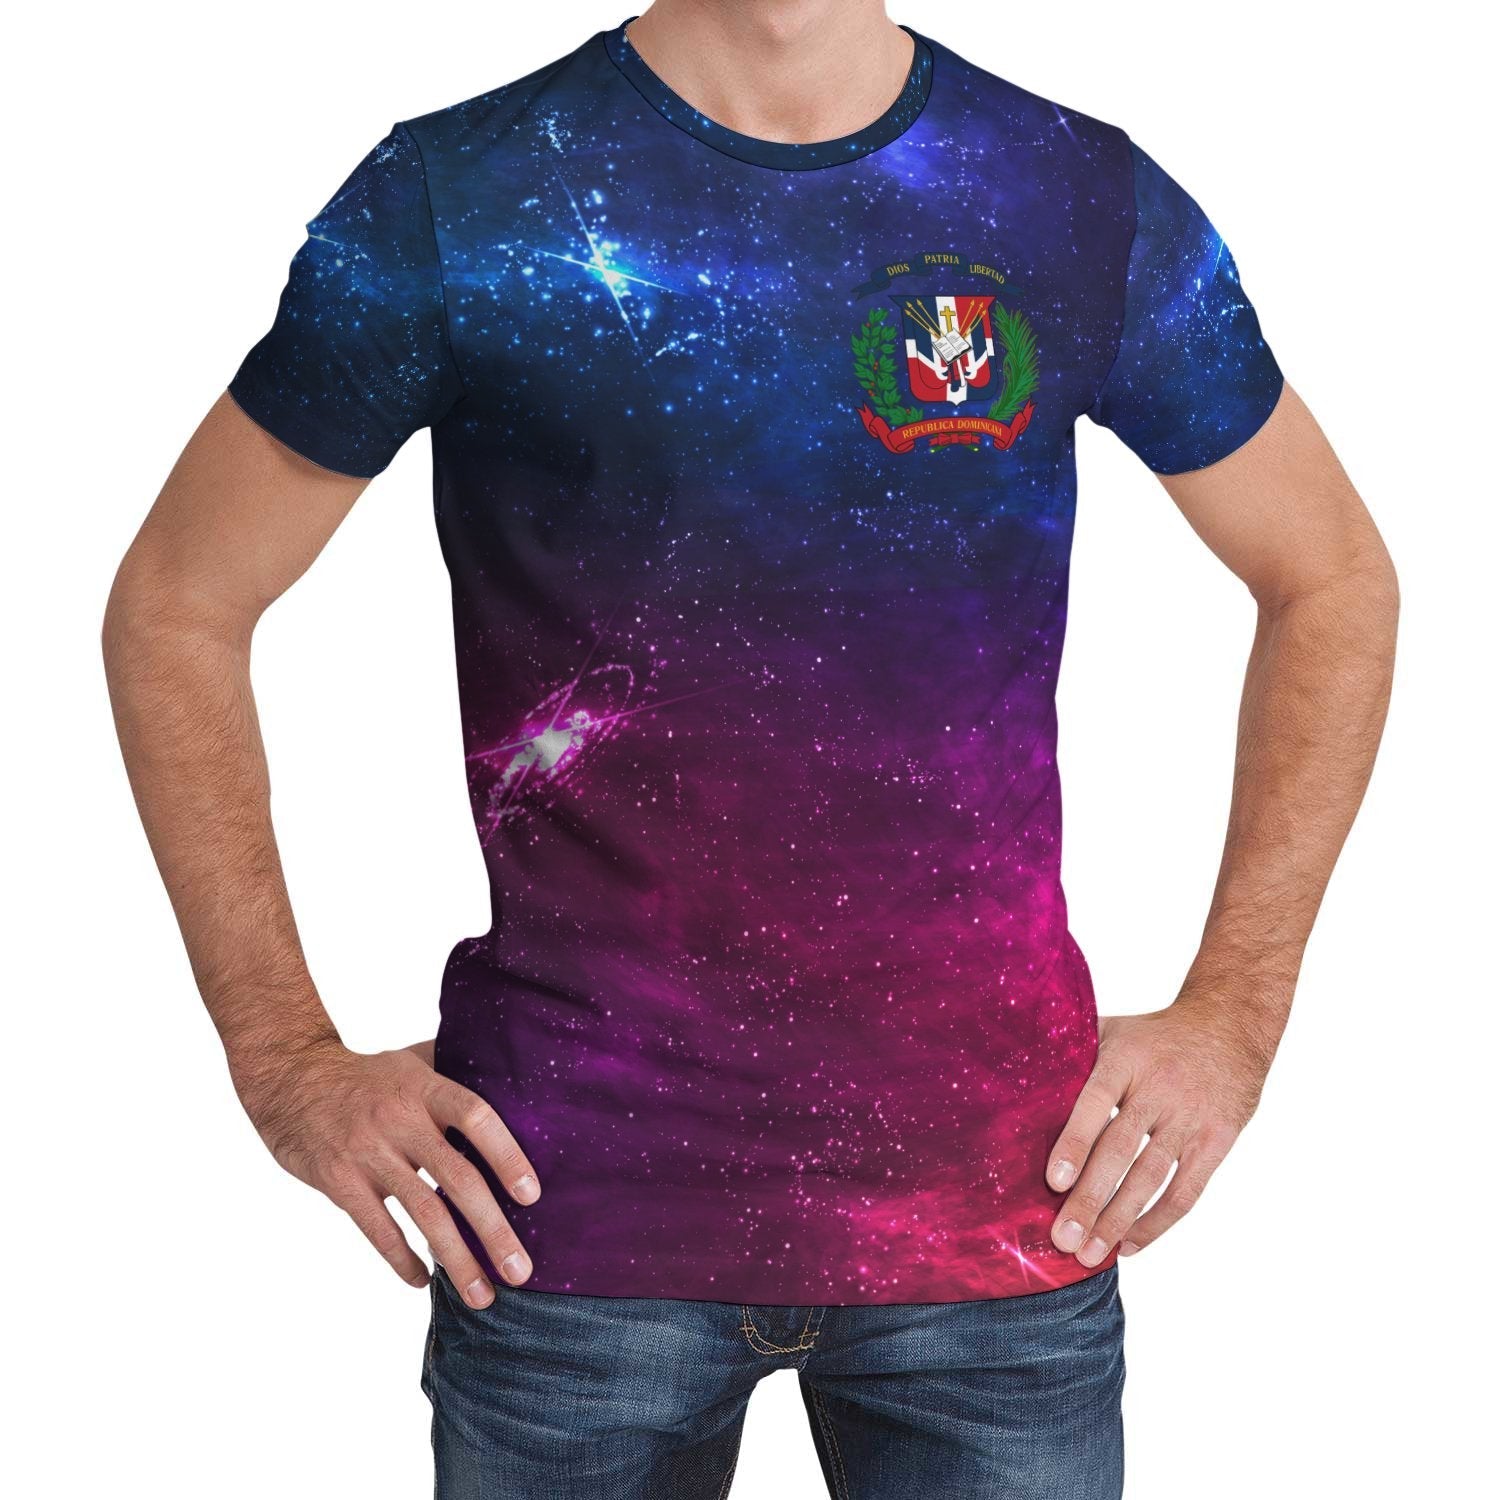 dominican-republic-t-shirt-galaxy